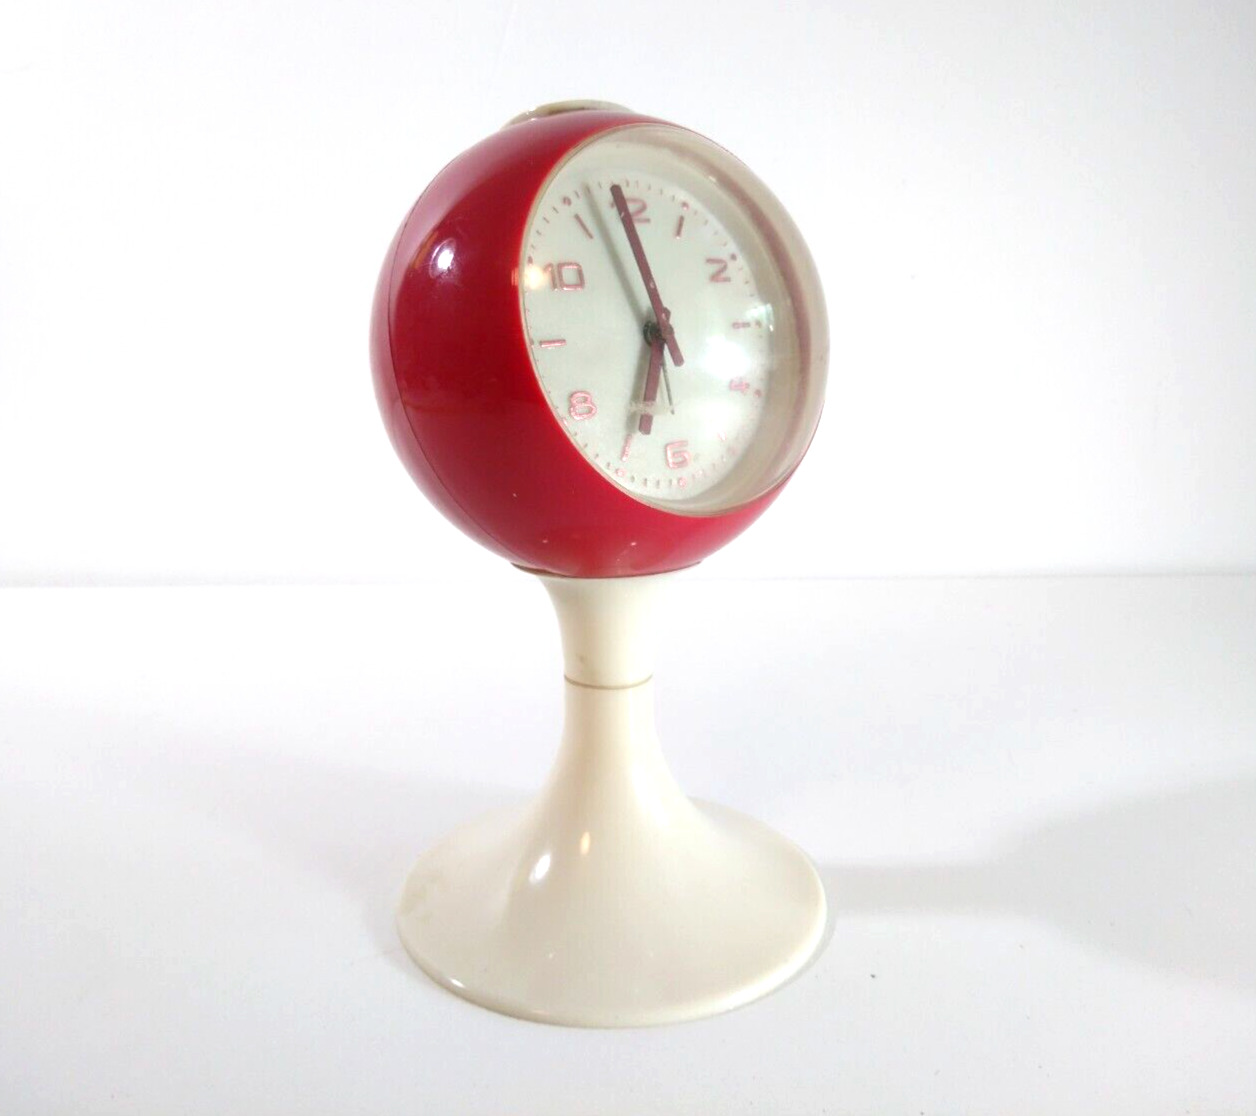 Vintage Space Age Design Alarm Clock 1970s